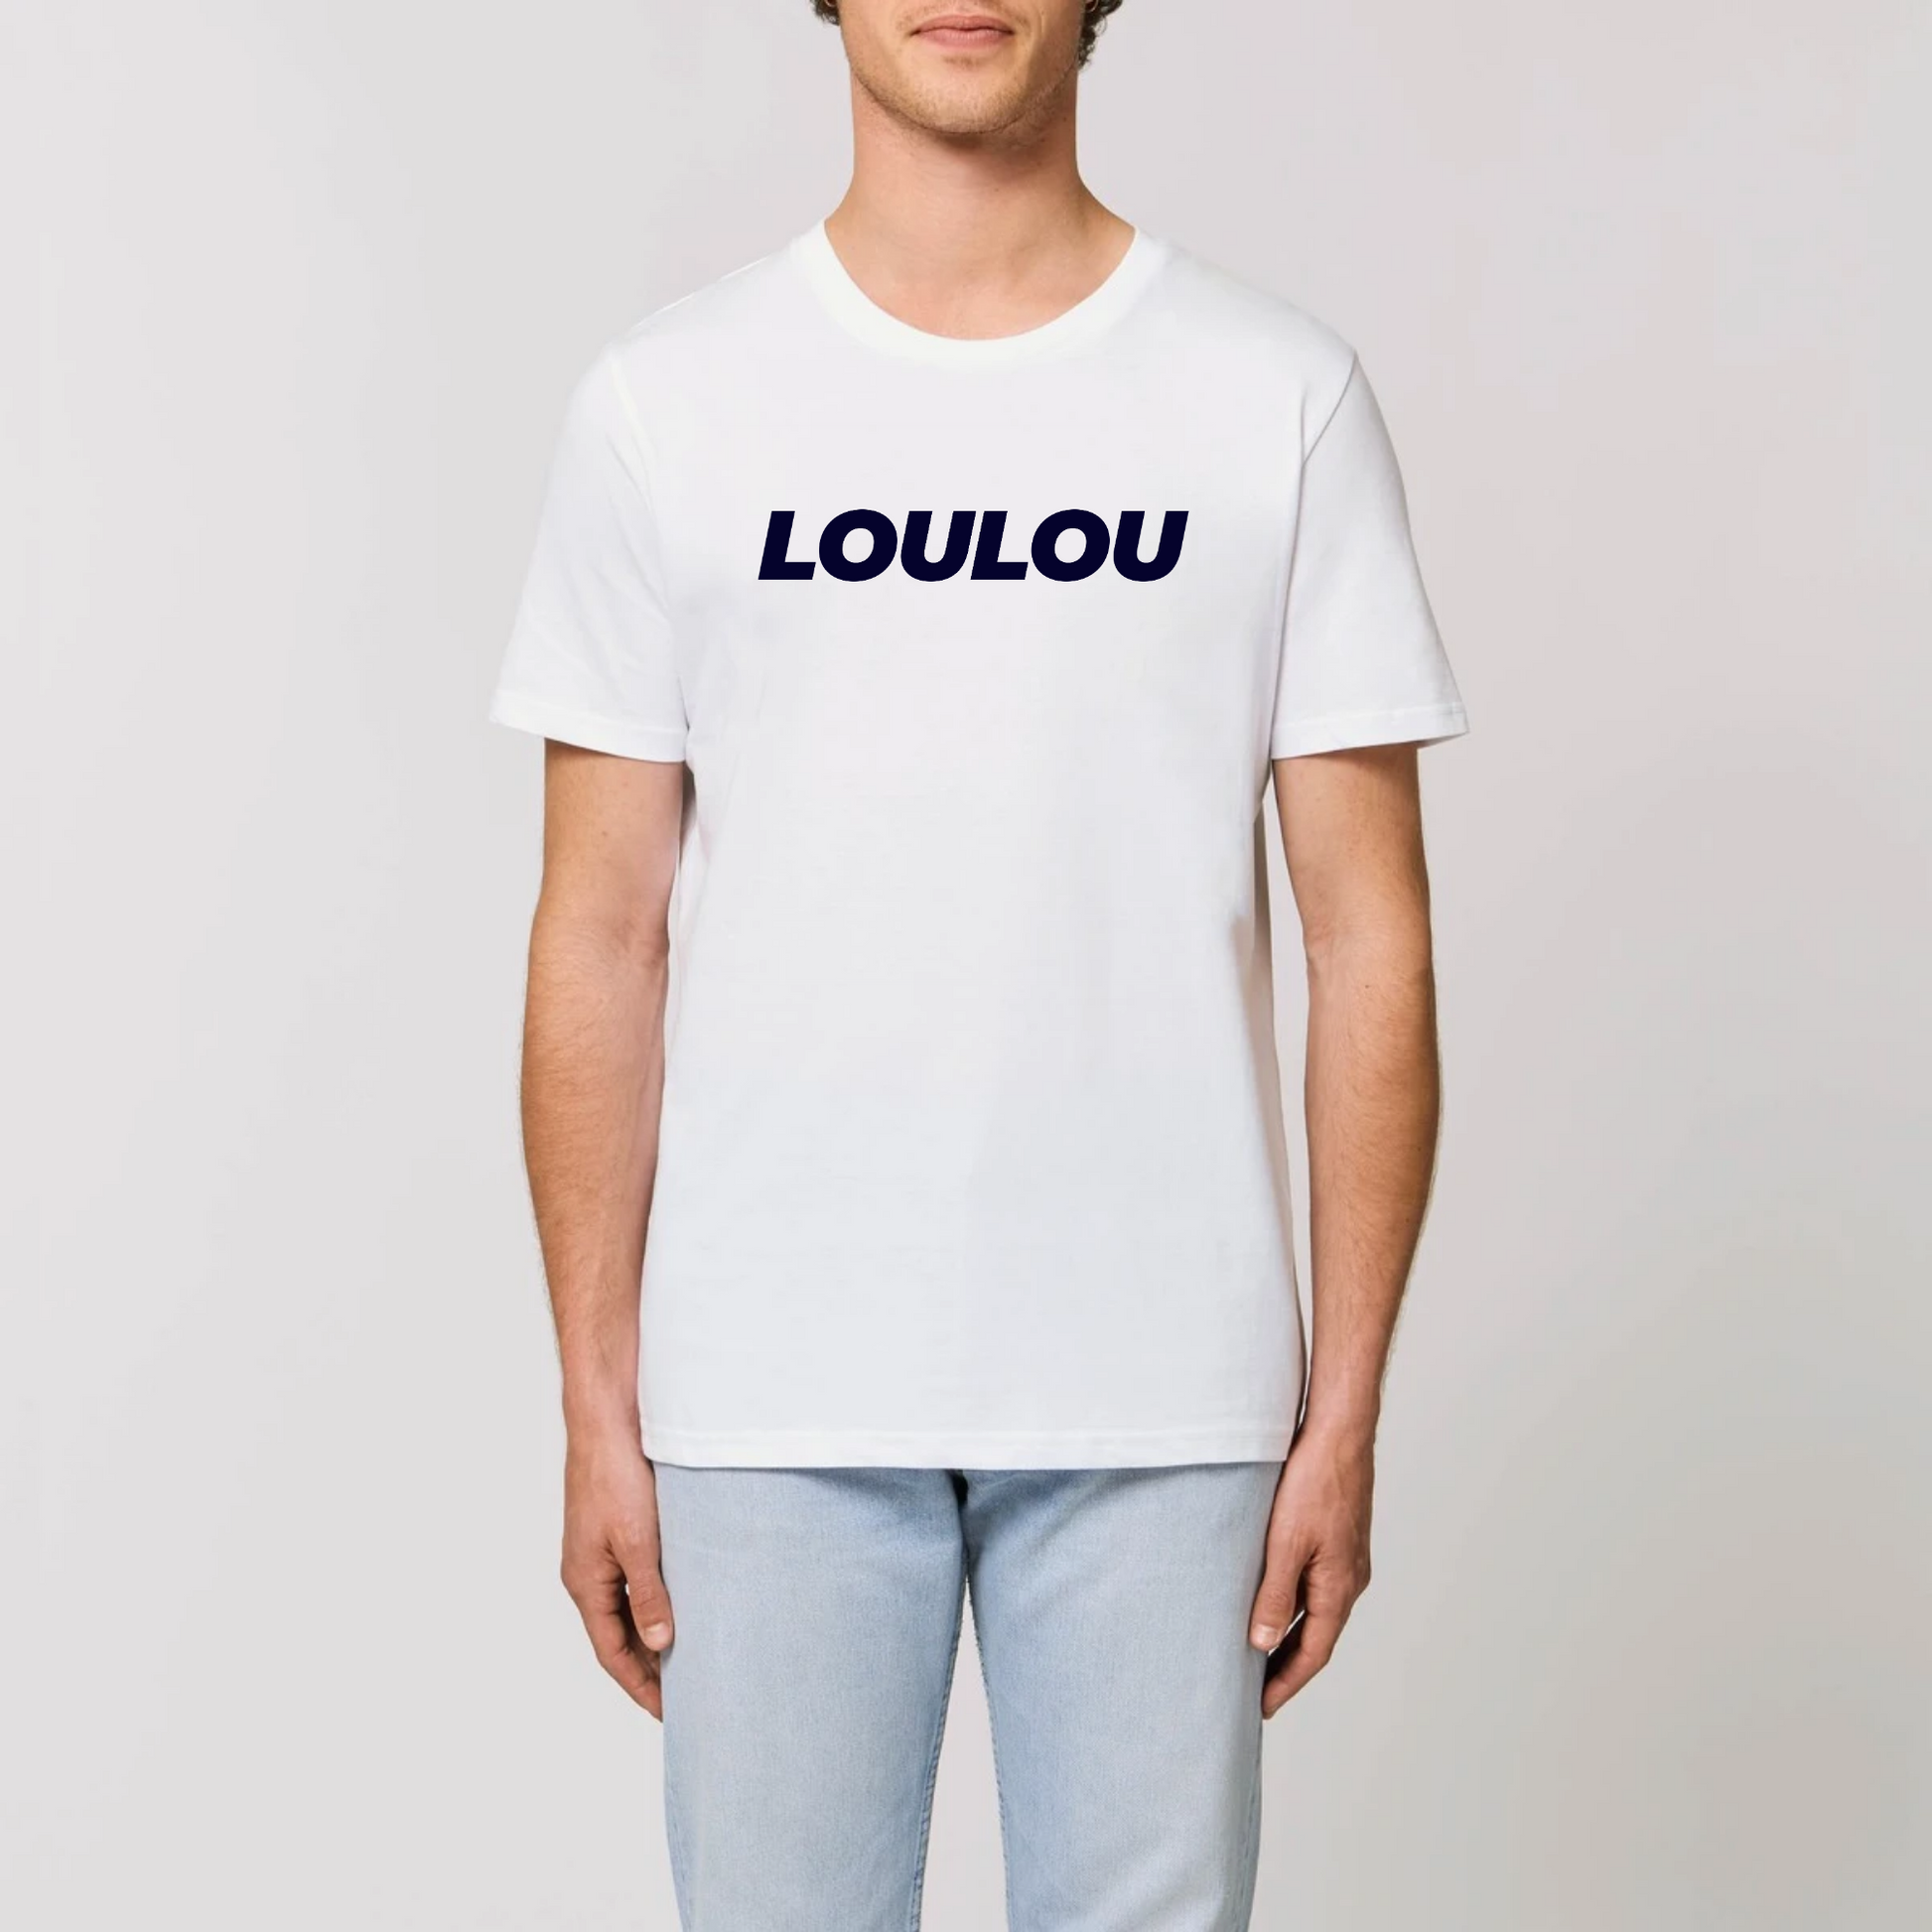 t-shirt loulou, T-French, t-shirt homme, coton bio, t-shirt saint valentin, t-shirt surnom, t-shirt humour, Blanc